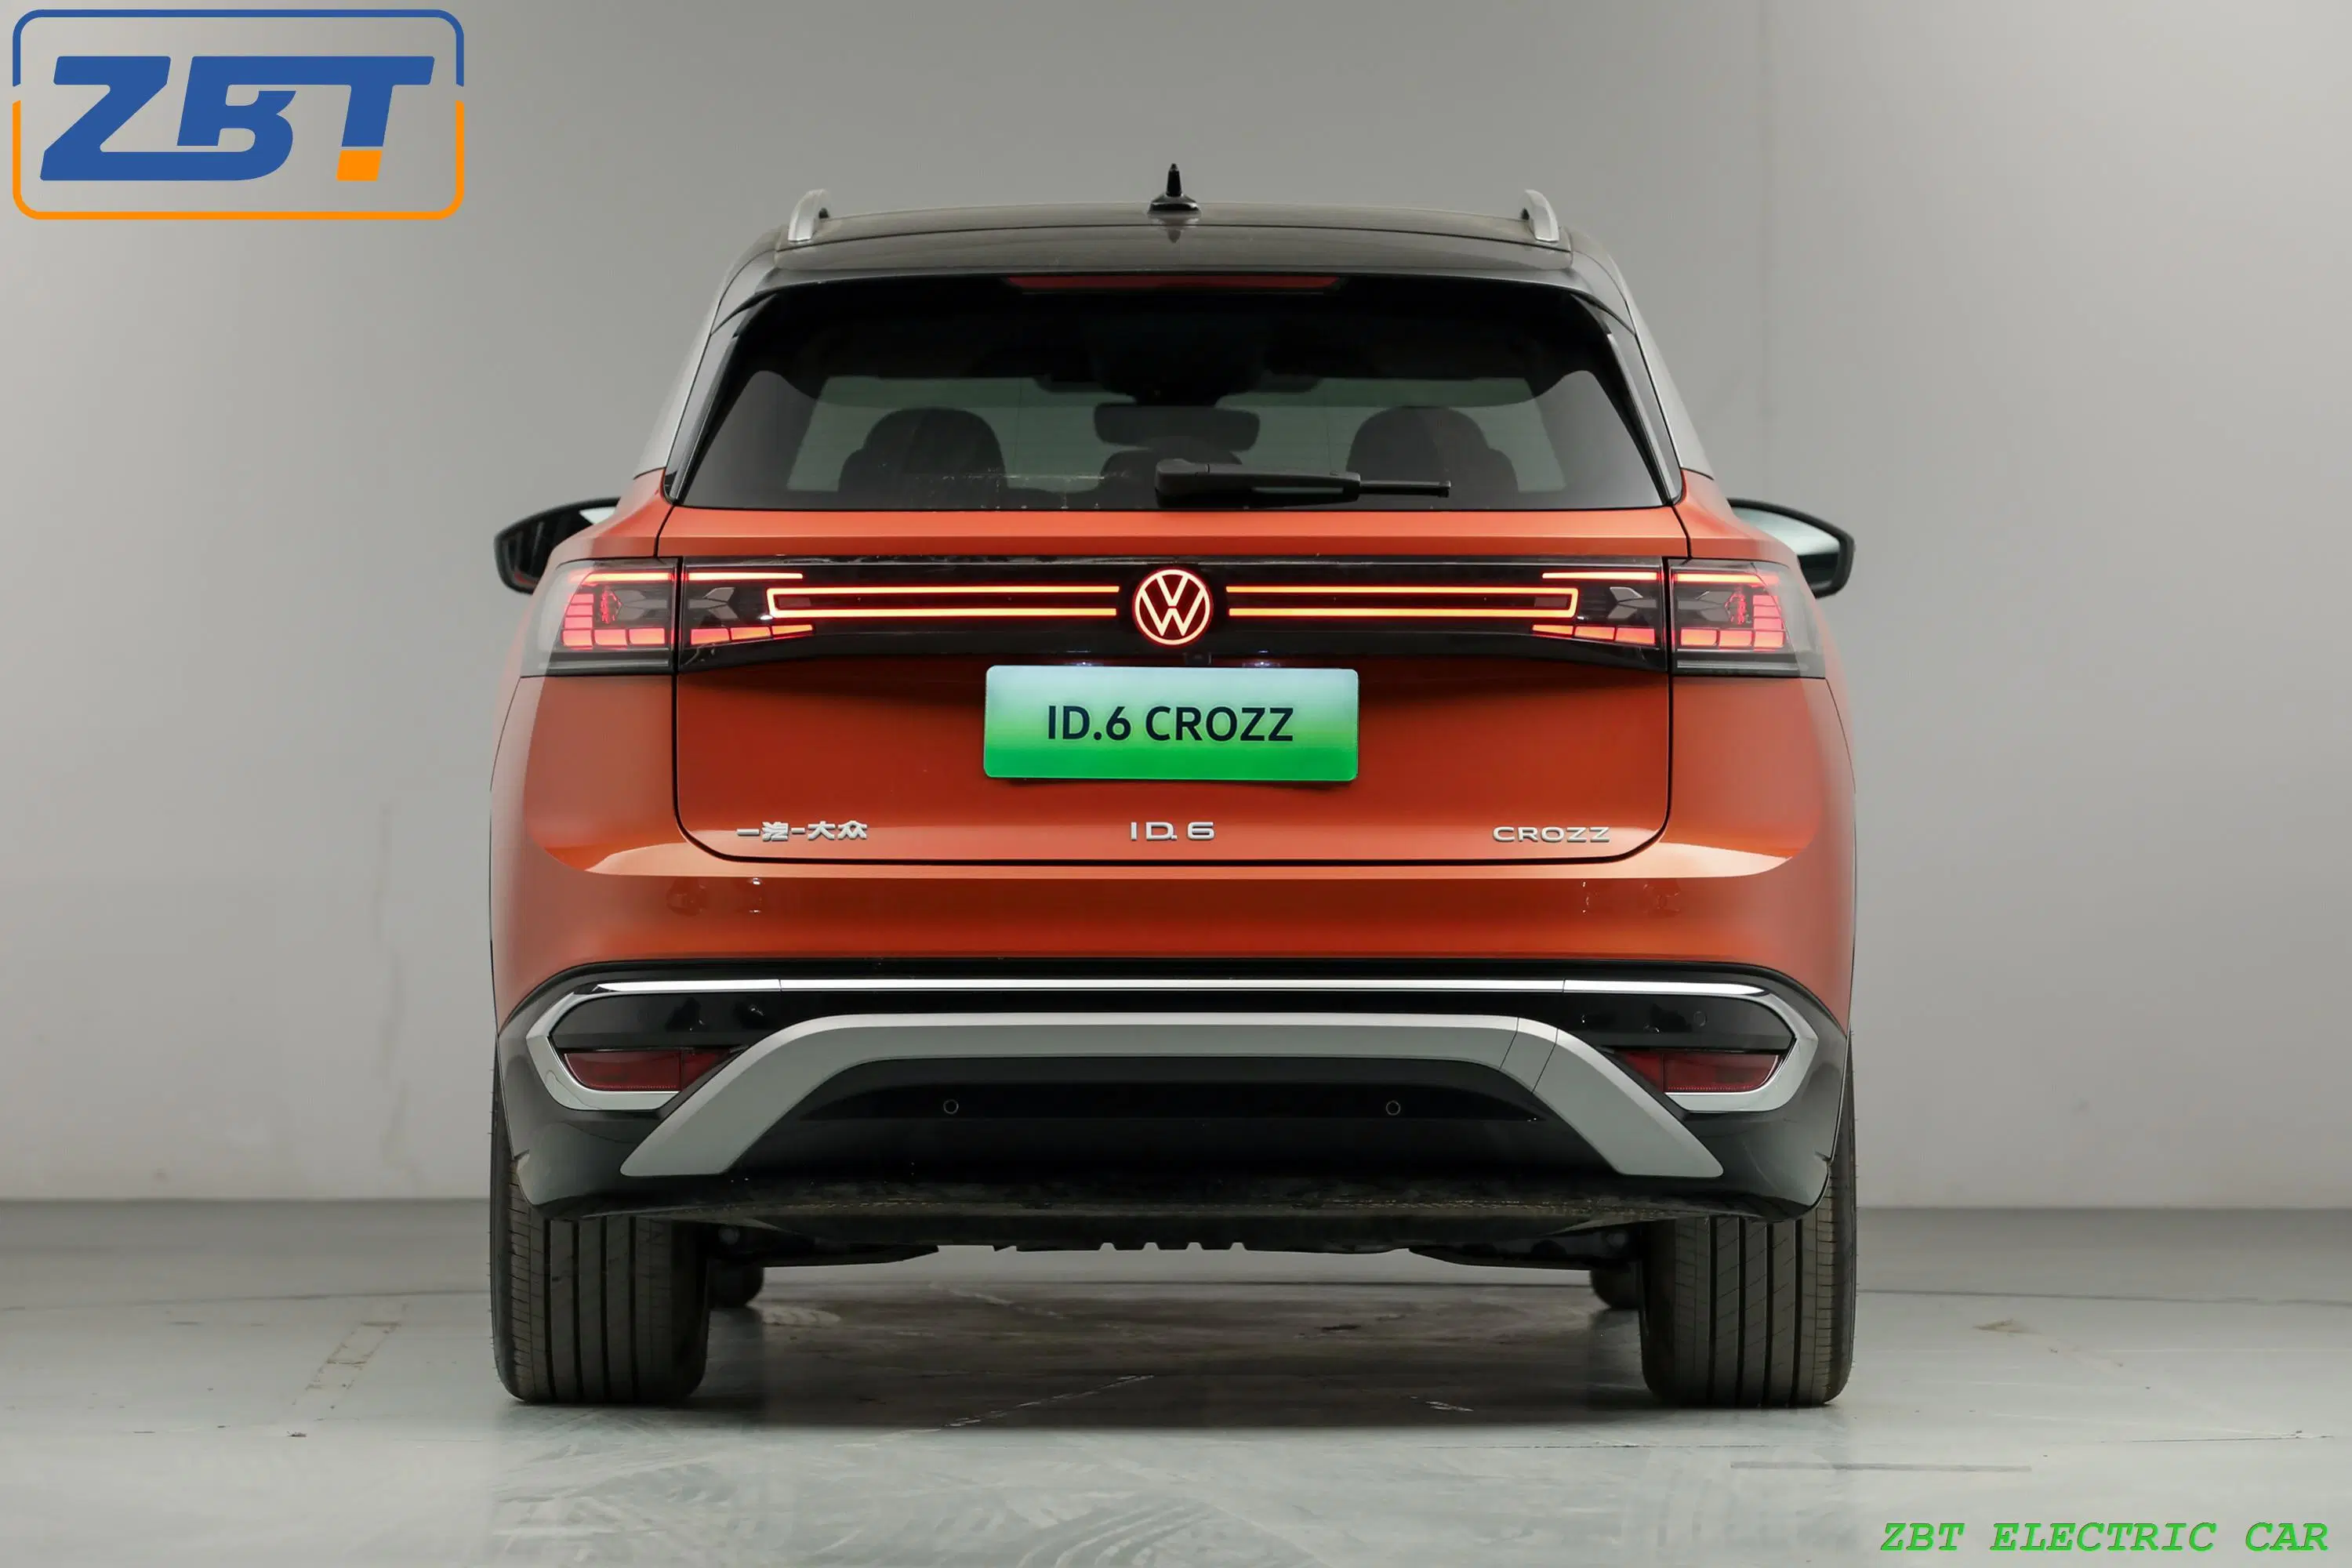 Volkswagen id.6 crozz New Energy Vehicle SUV Vehicle